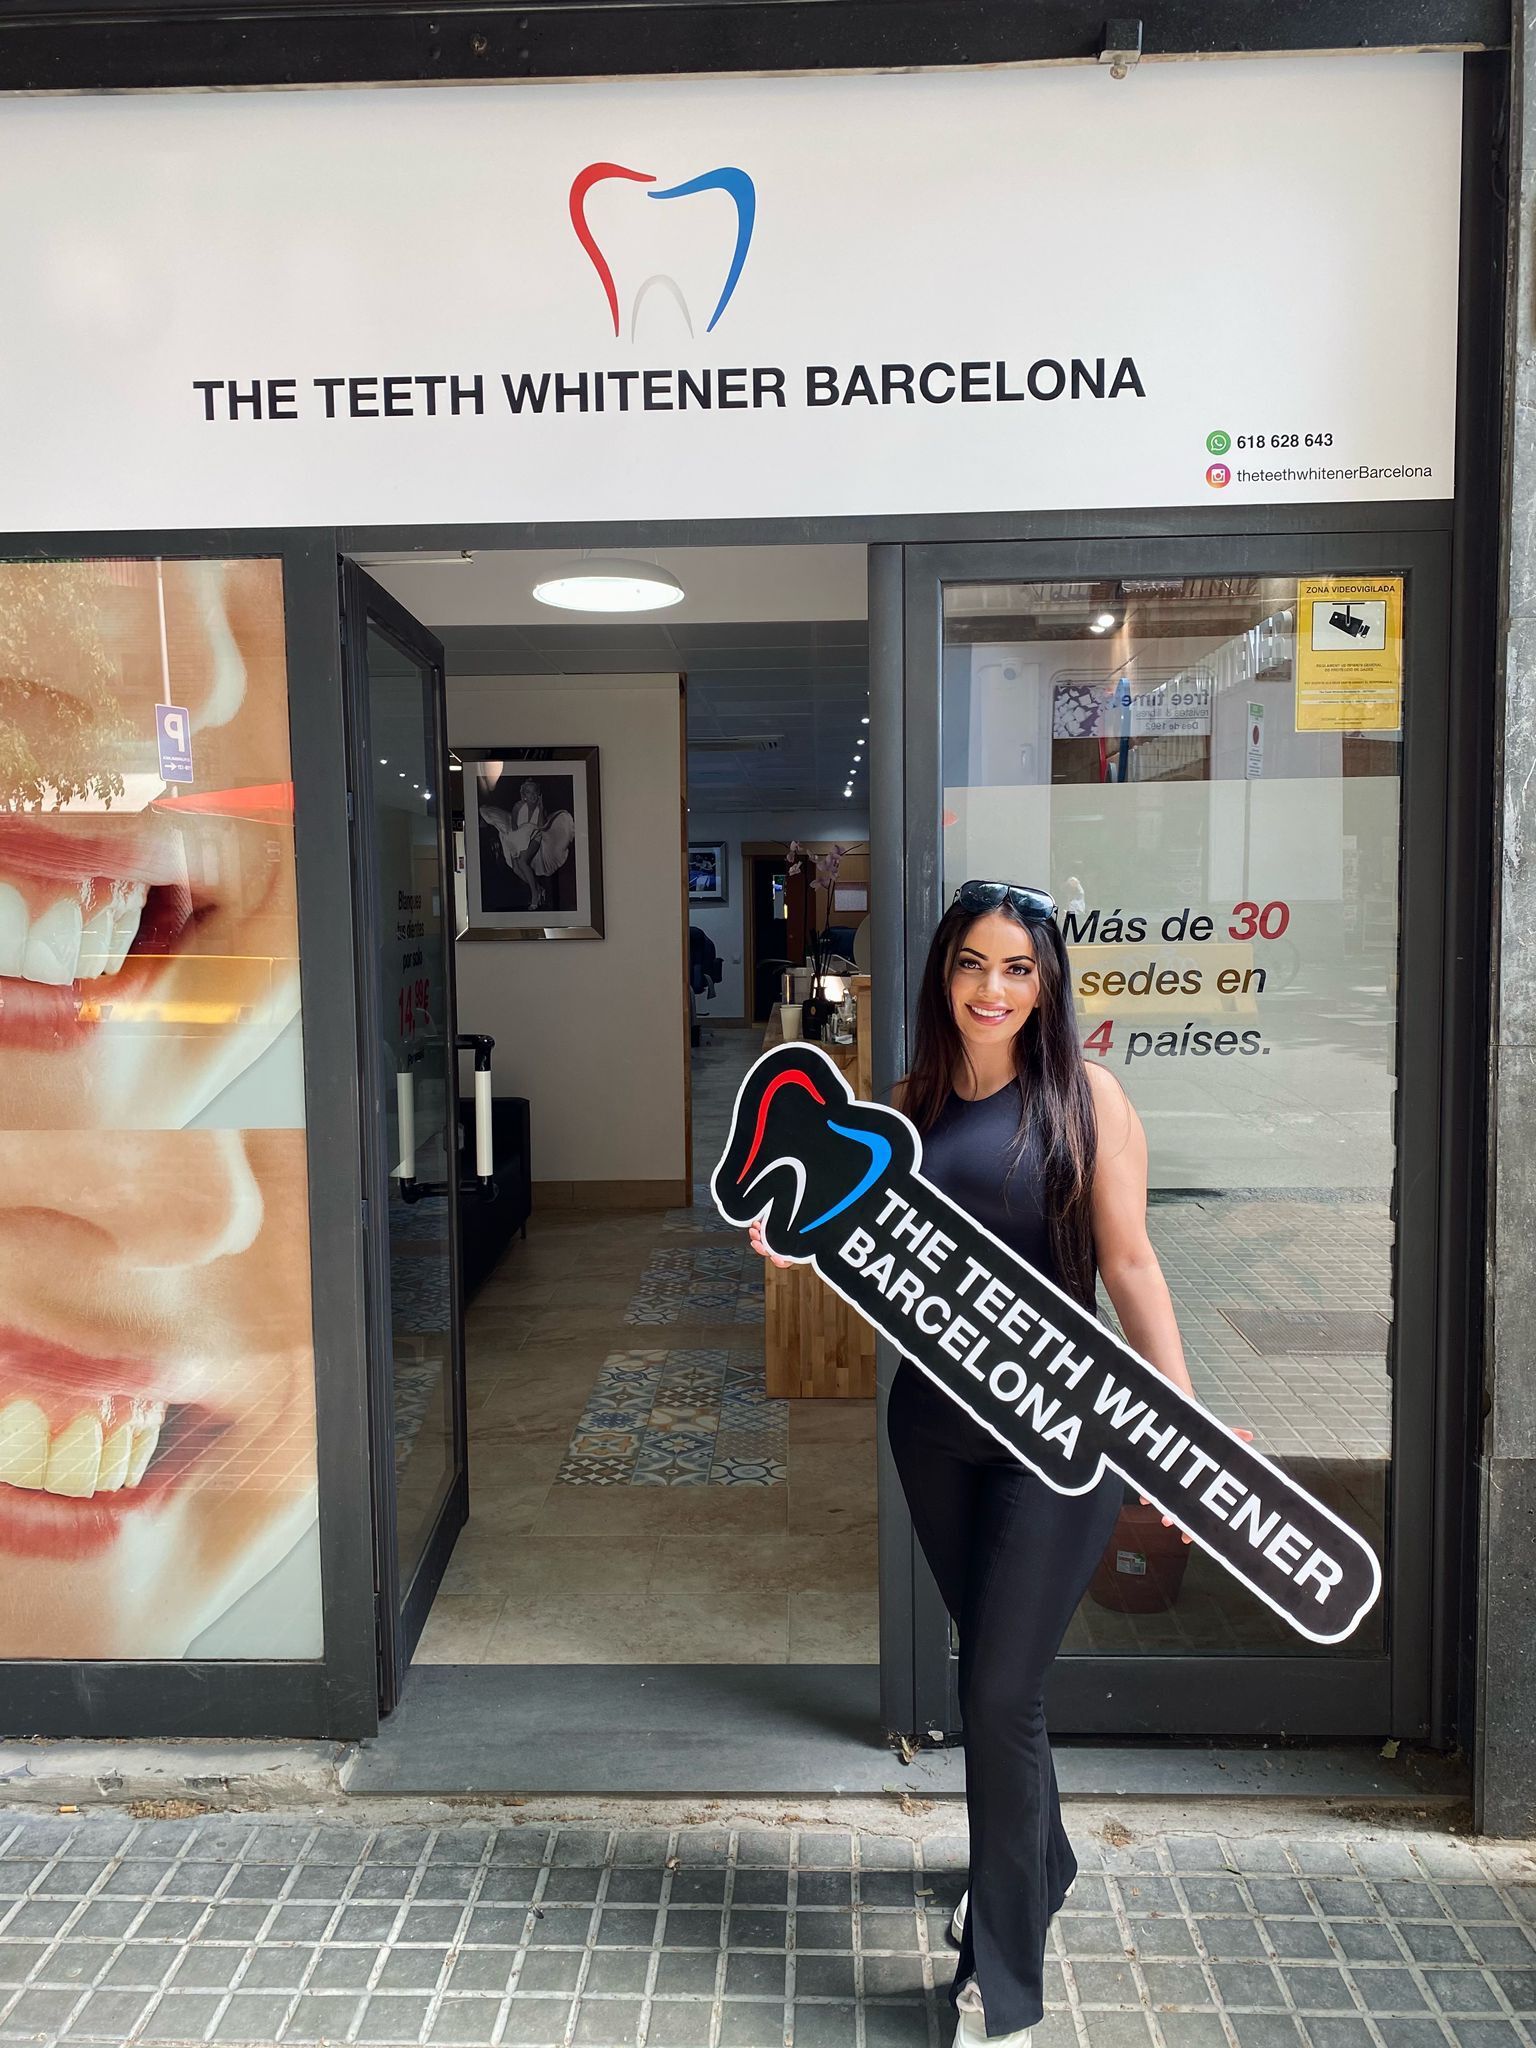 The teeth whitener Barcelona